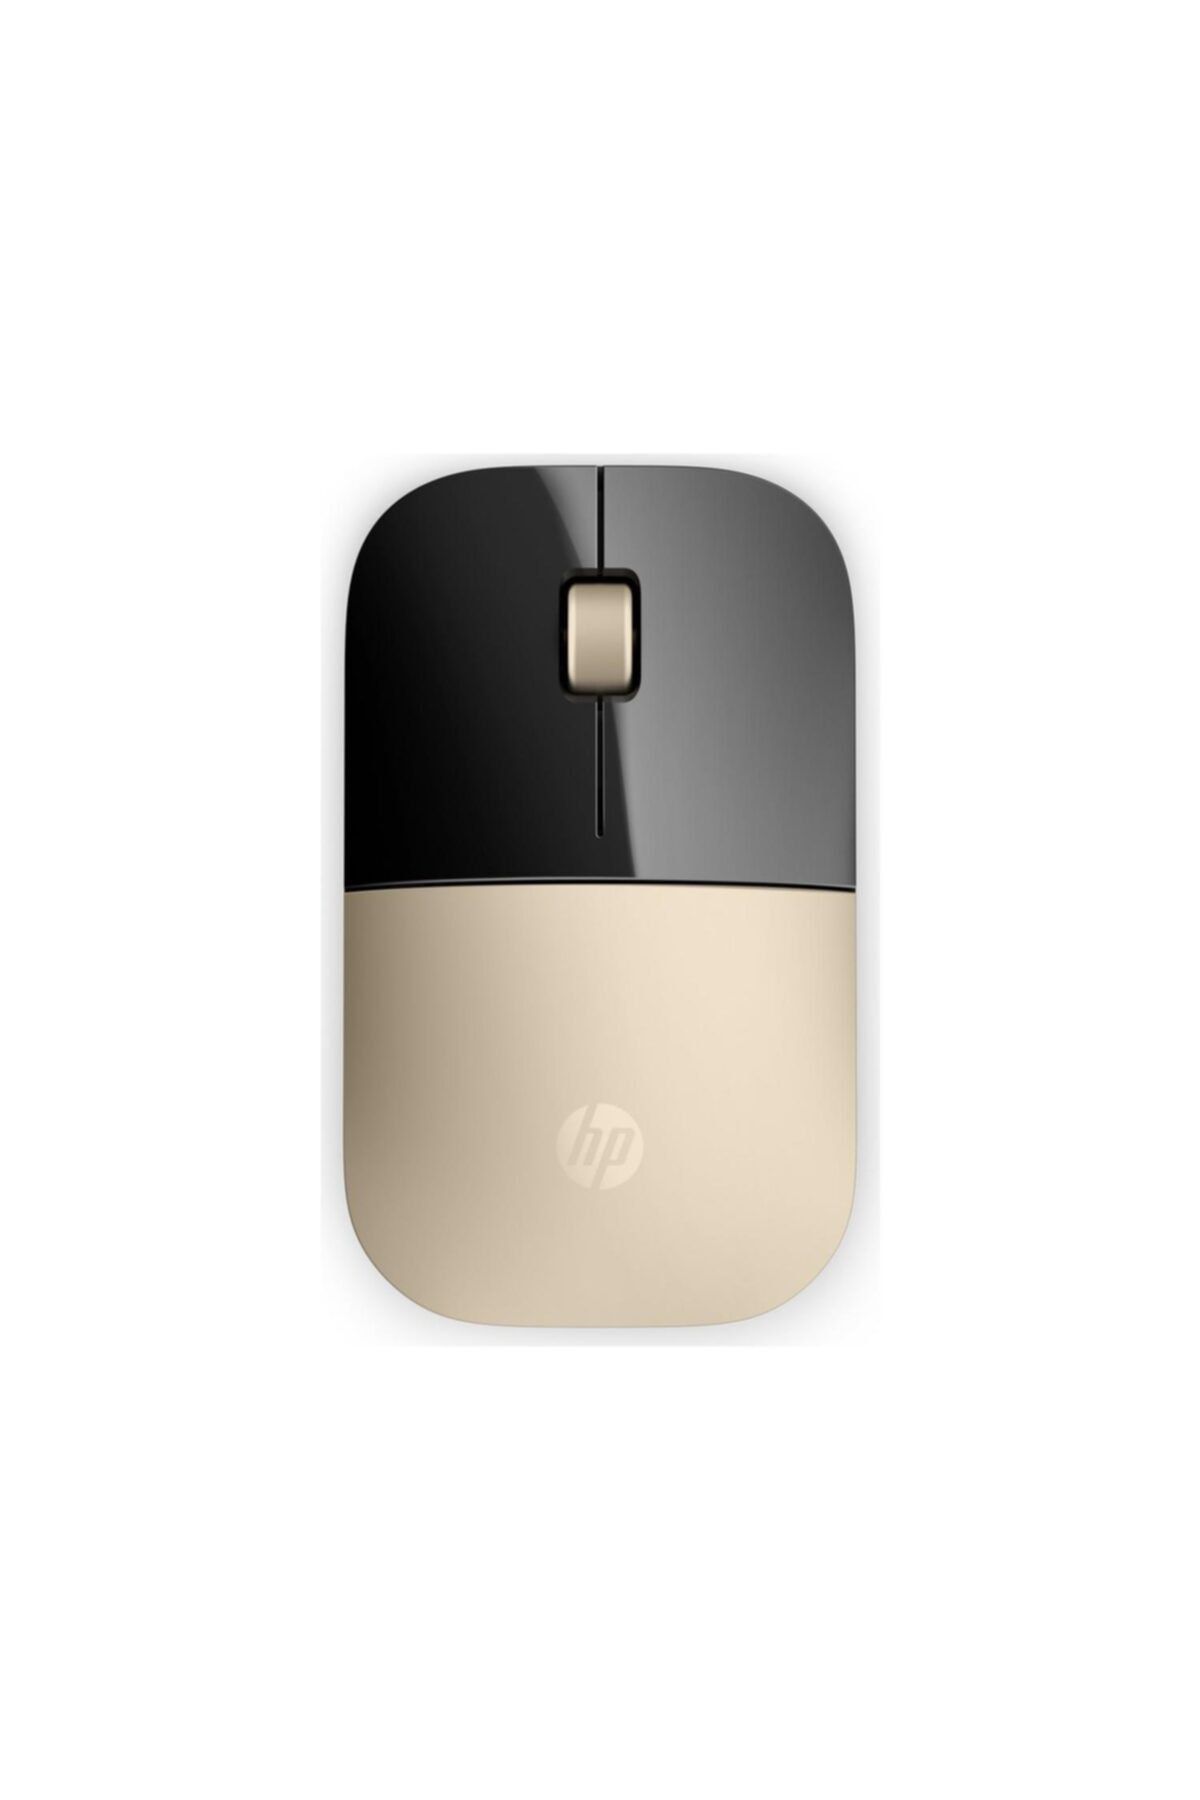 HP Z3700 Kablosuz Altın Sarısı Mouse X7q43aa